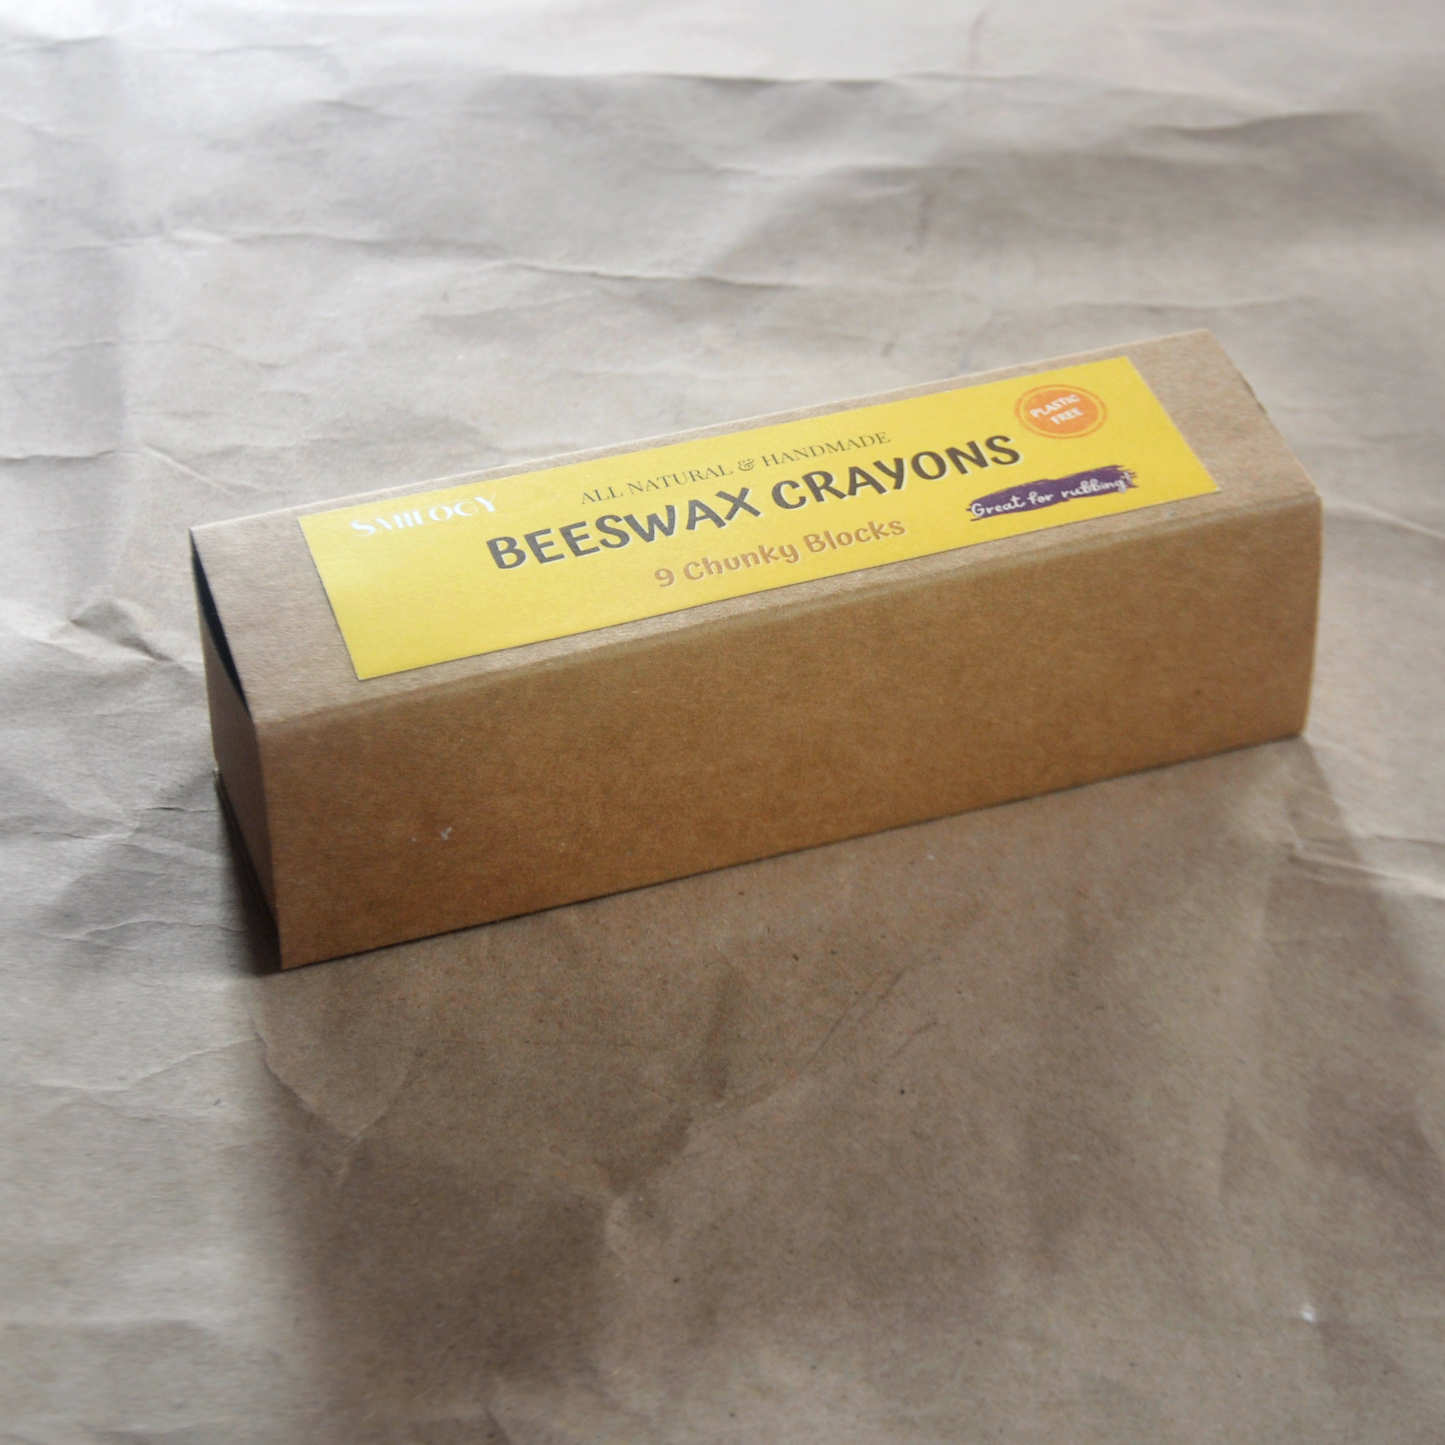 organic beeswax block crayons for rubbing. Closed box